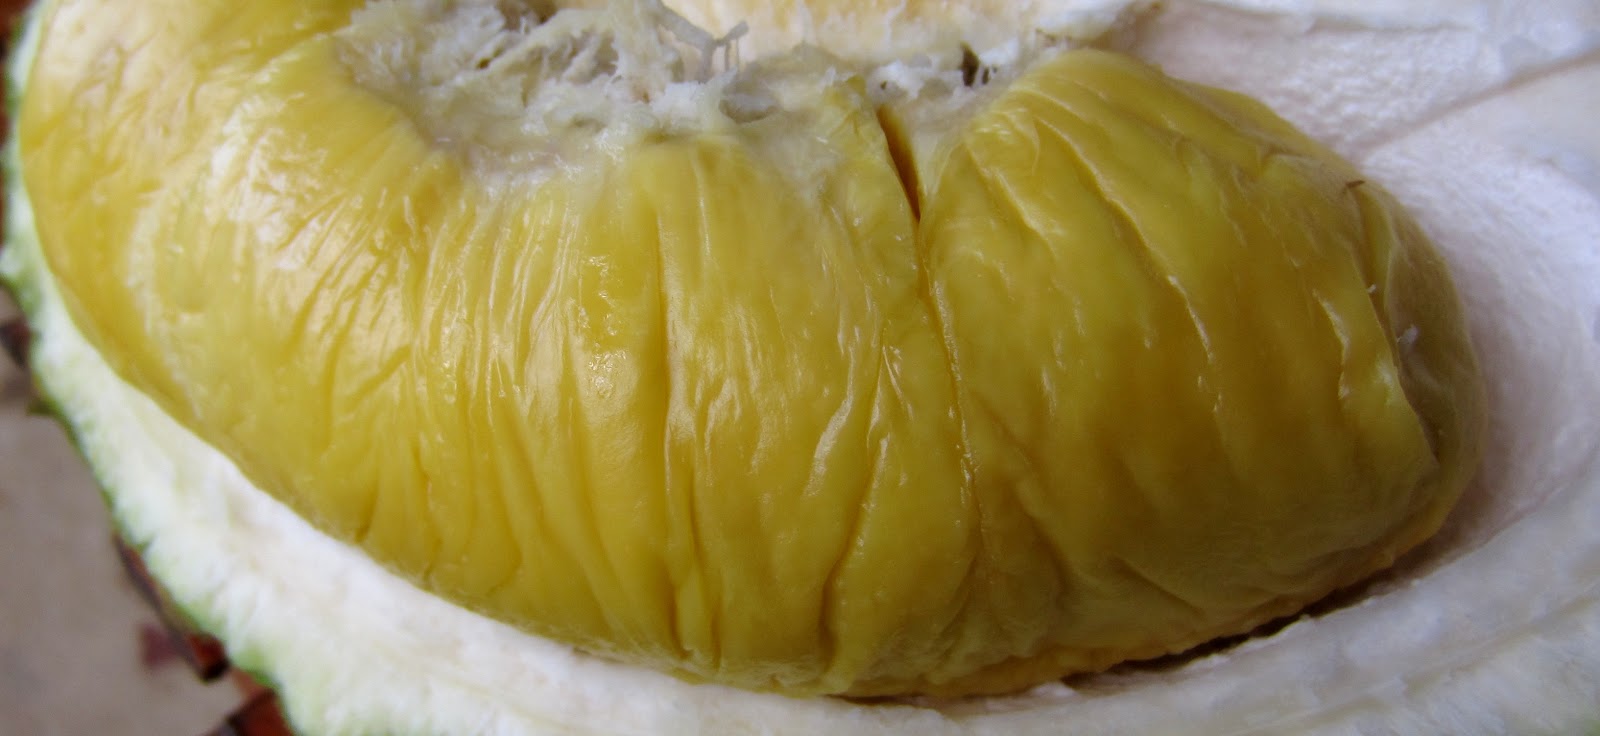 Mesmerizing Malaysia: Musang King Durian from Raub Pahang